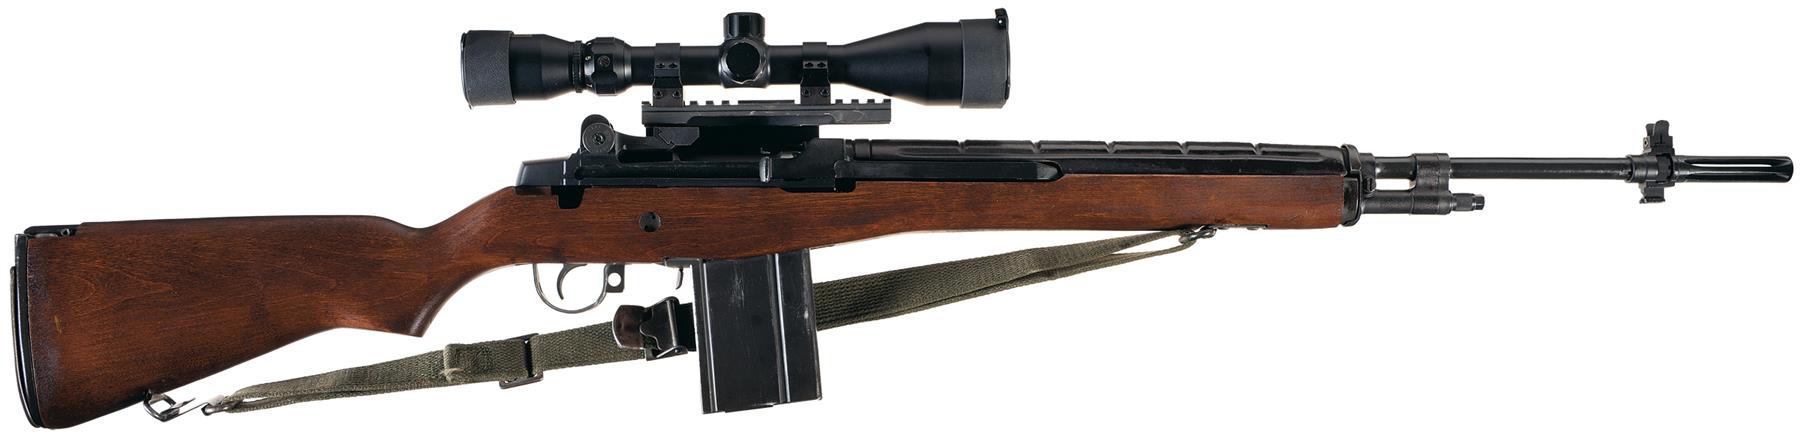 fed ord m14 rifle